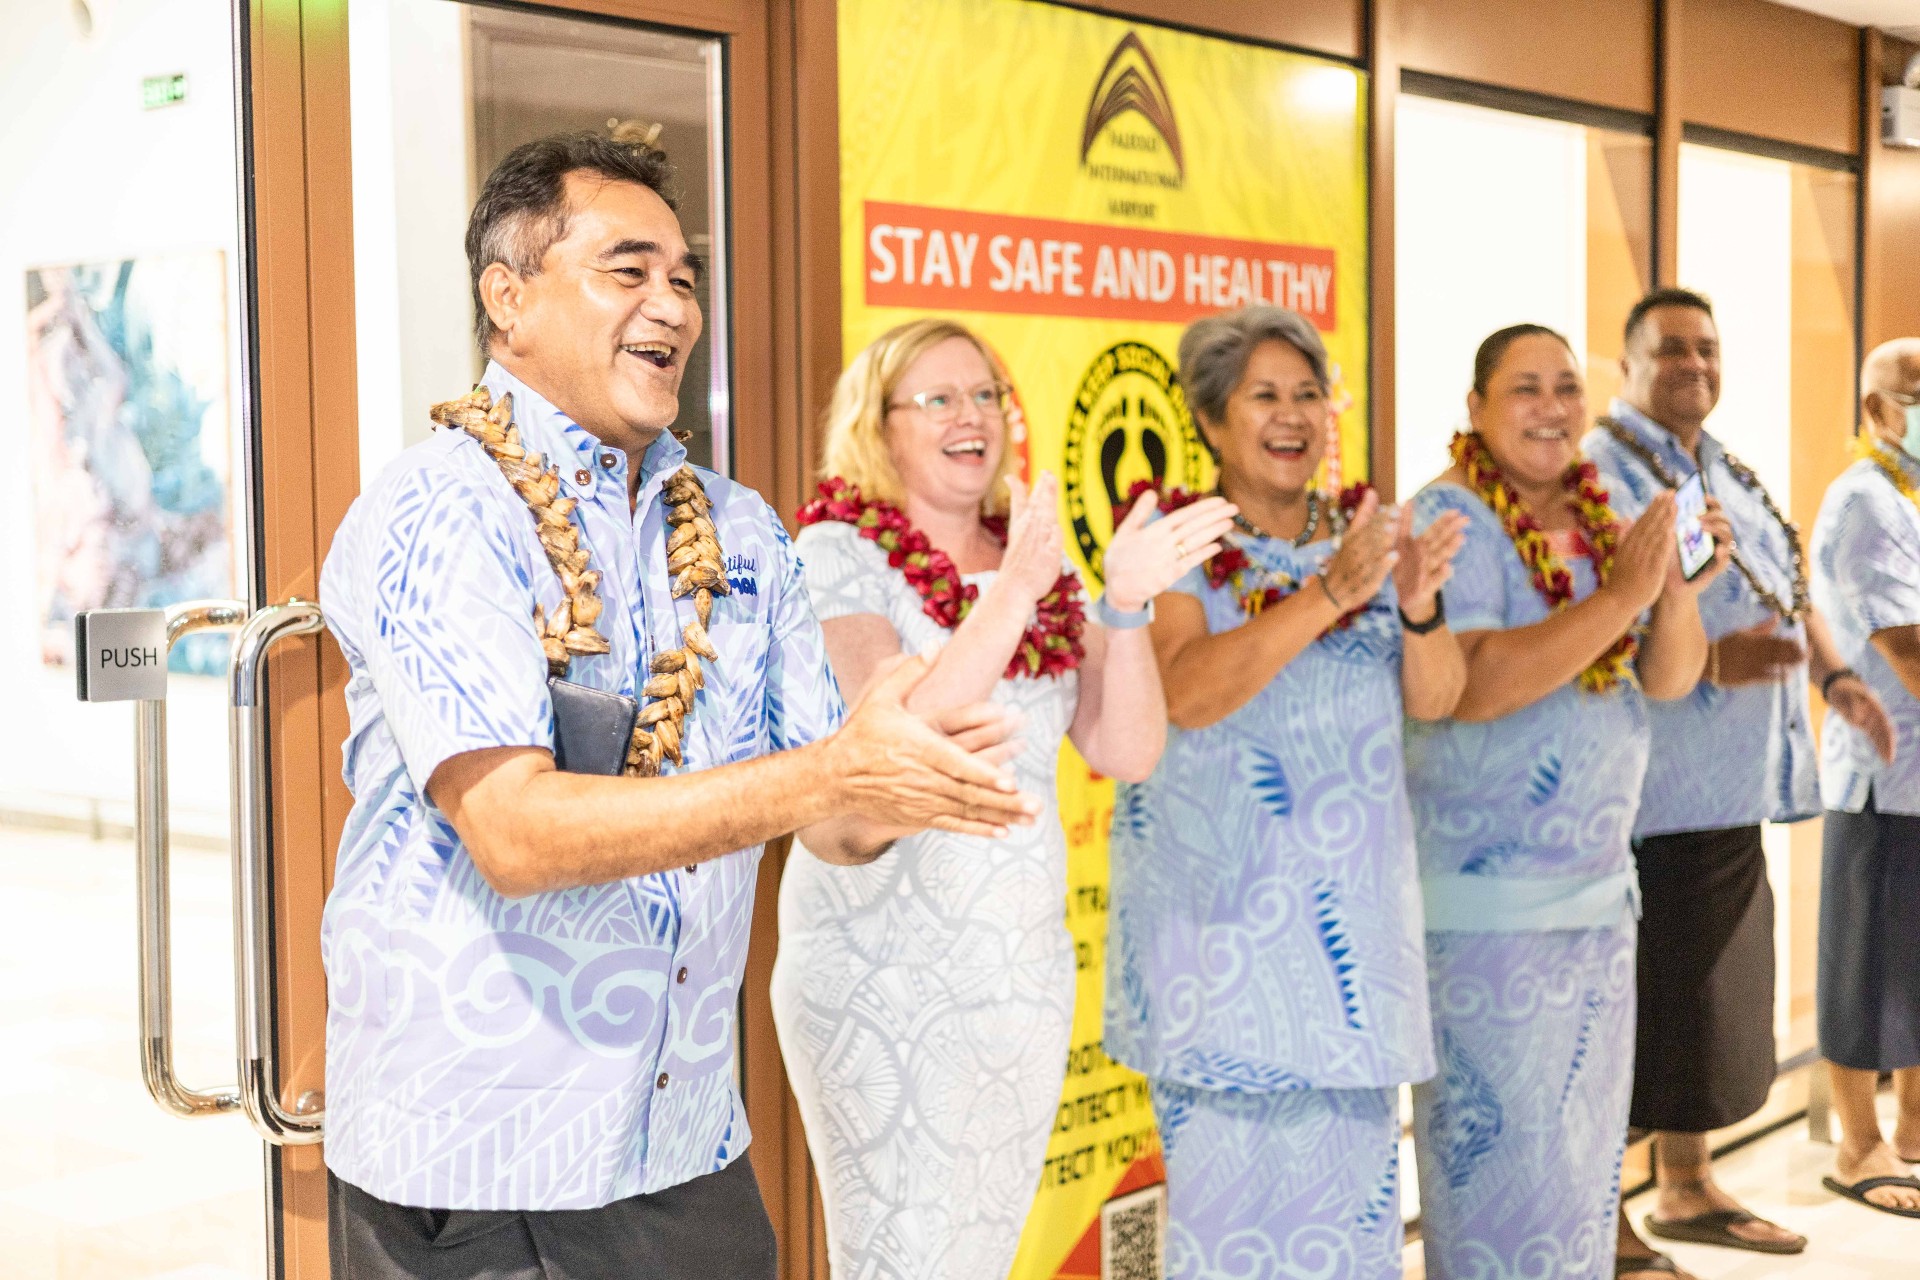 Samoa celebrates as borders reopen to visitors